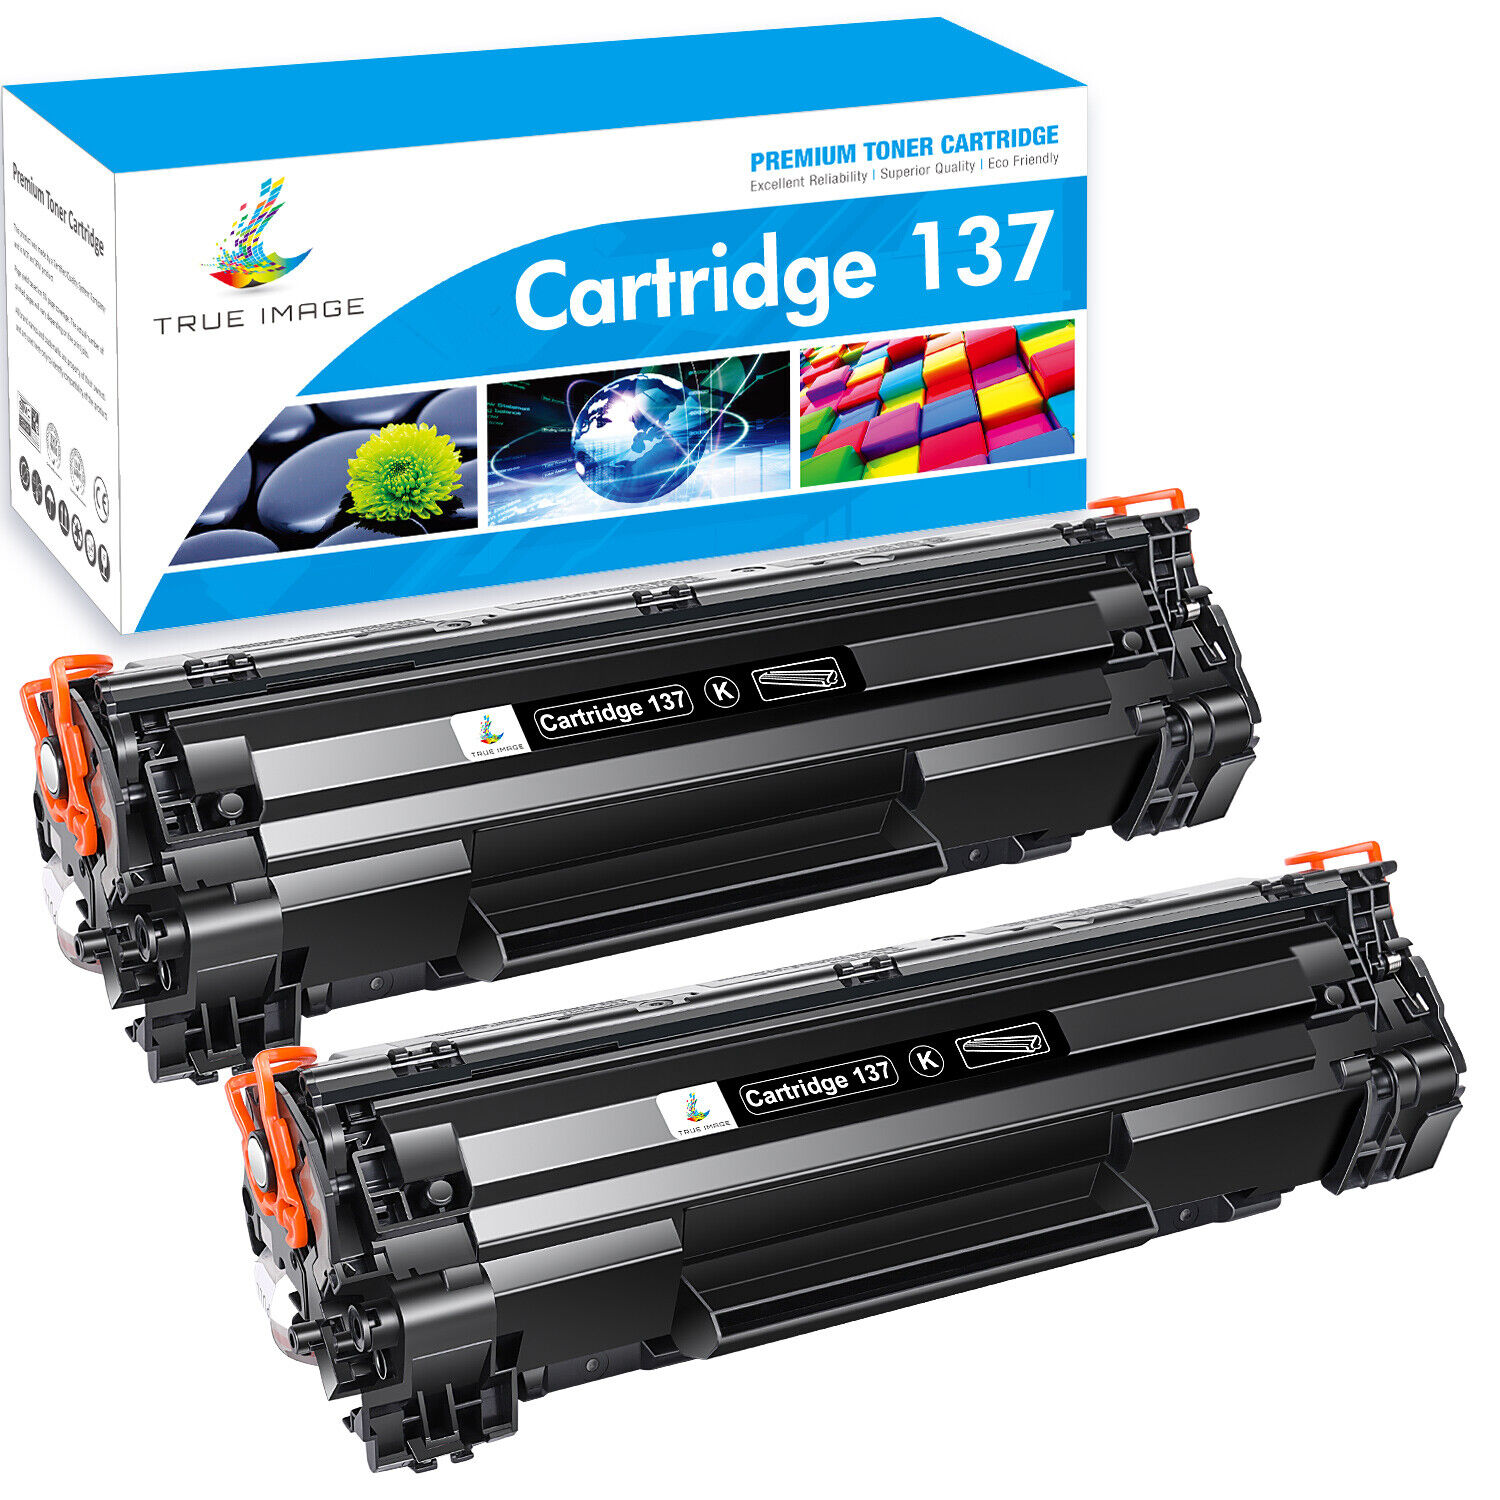 20PK CRG 137 Toner Cartridge for Canon Imageclass MF236n D570 MF232w Printer LOT